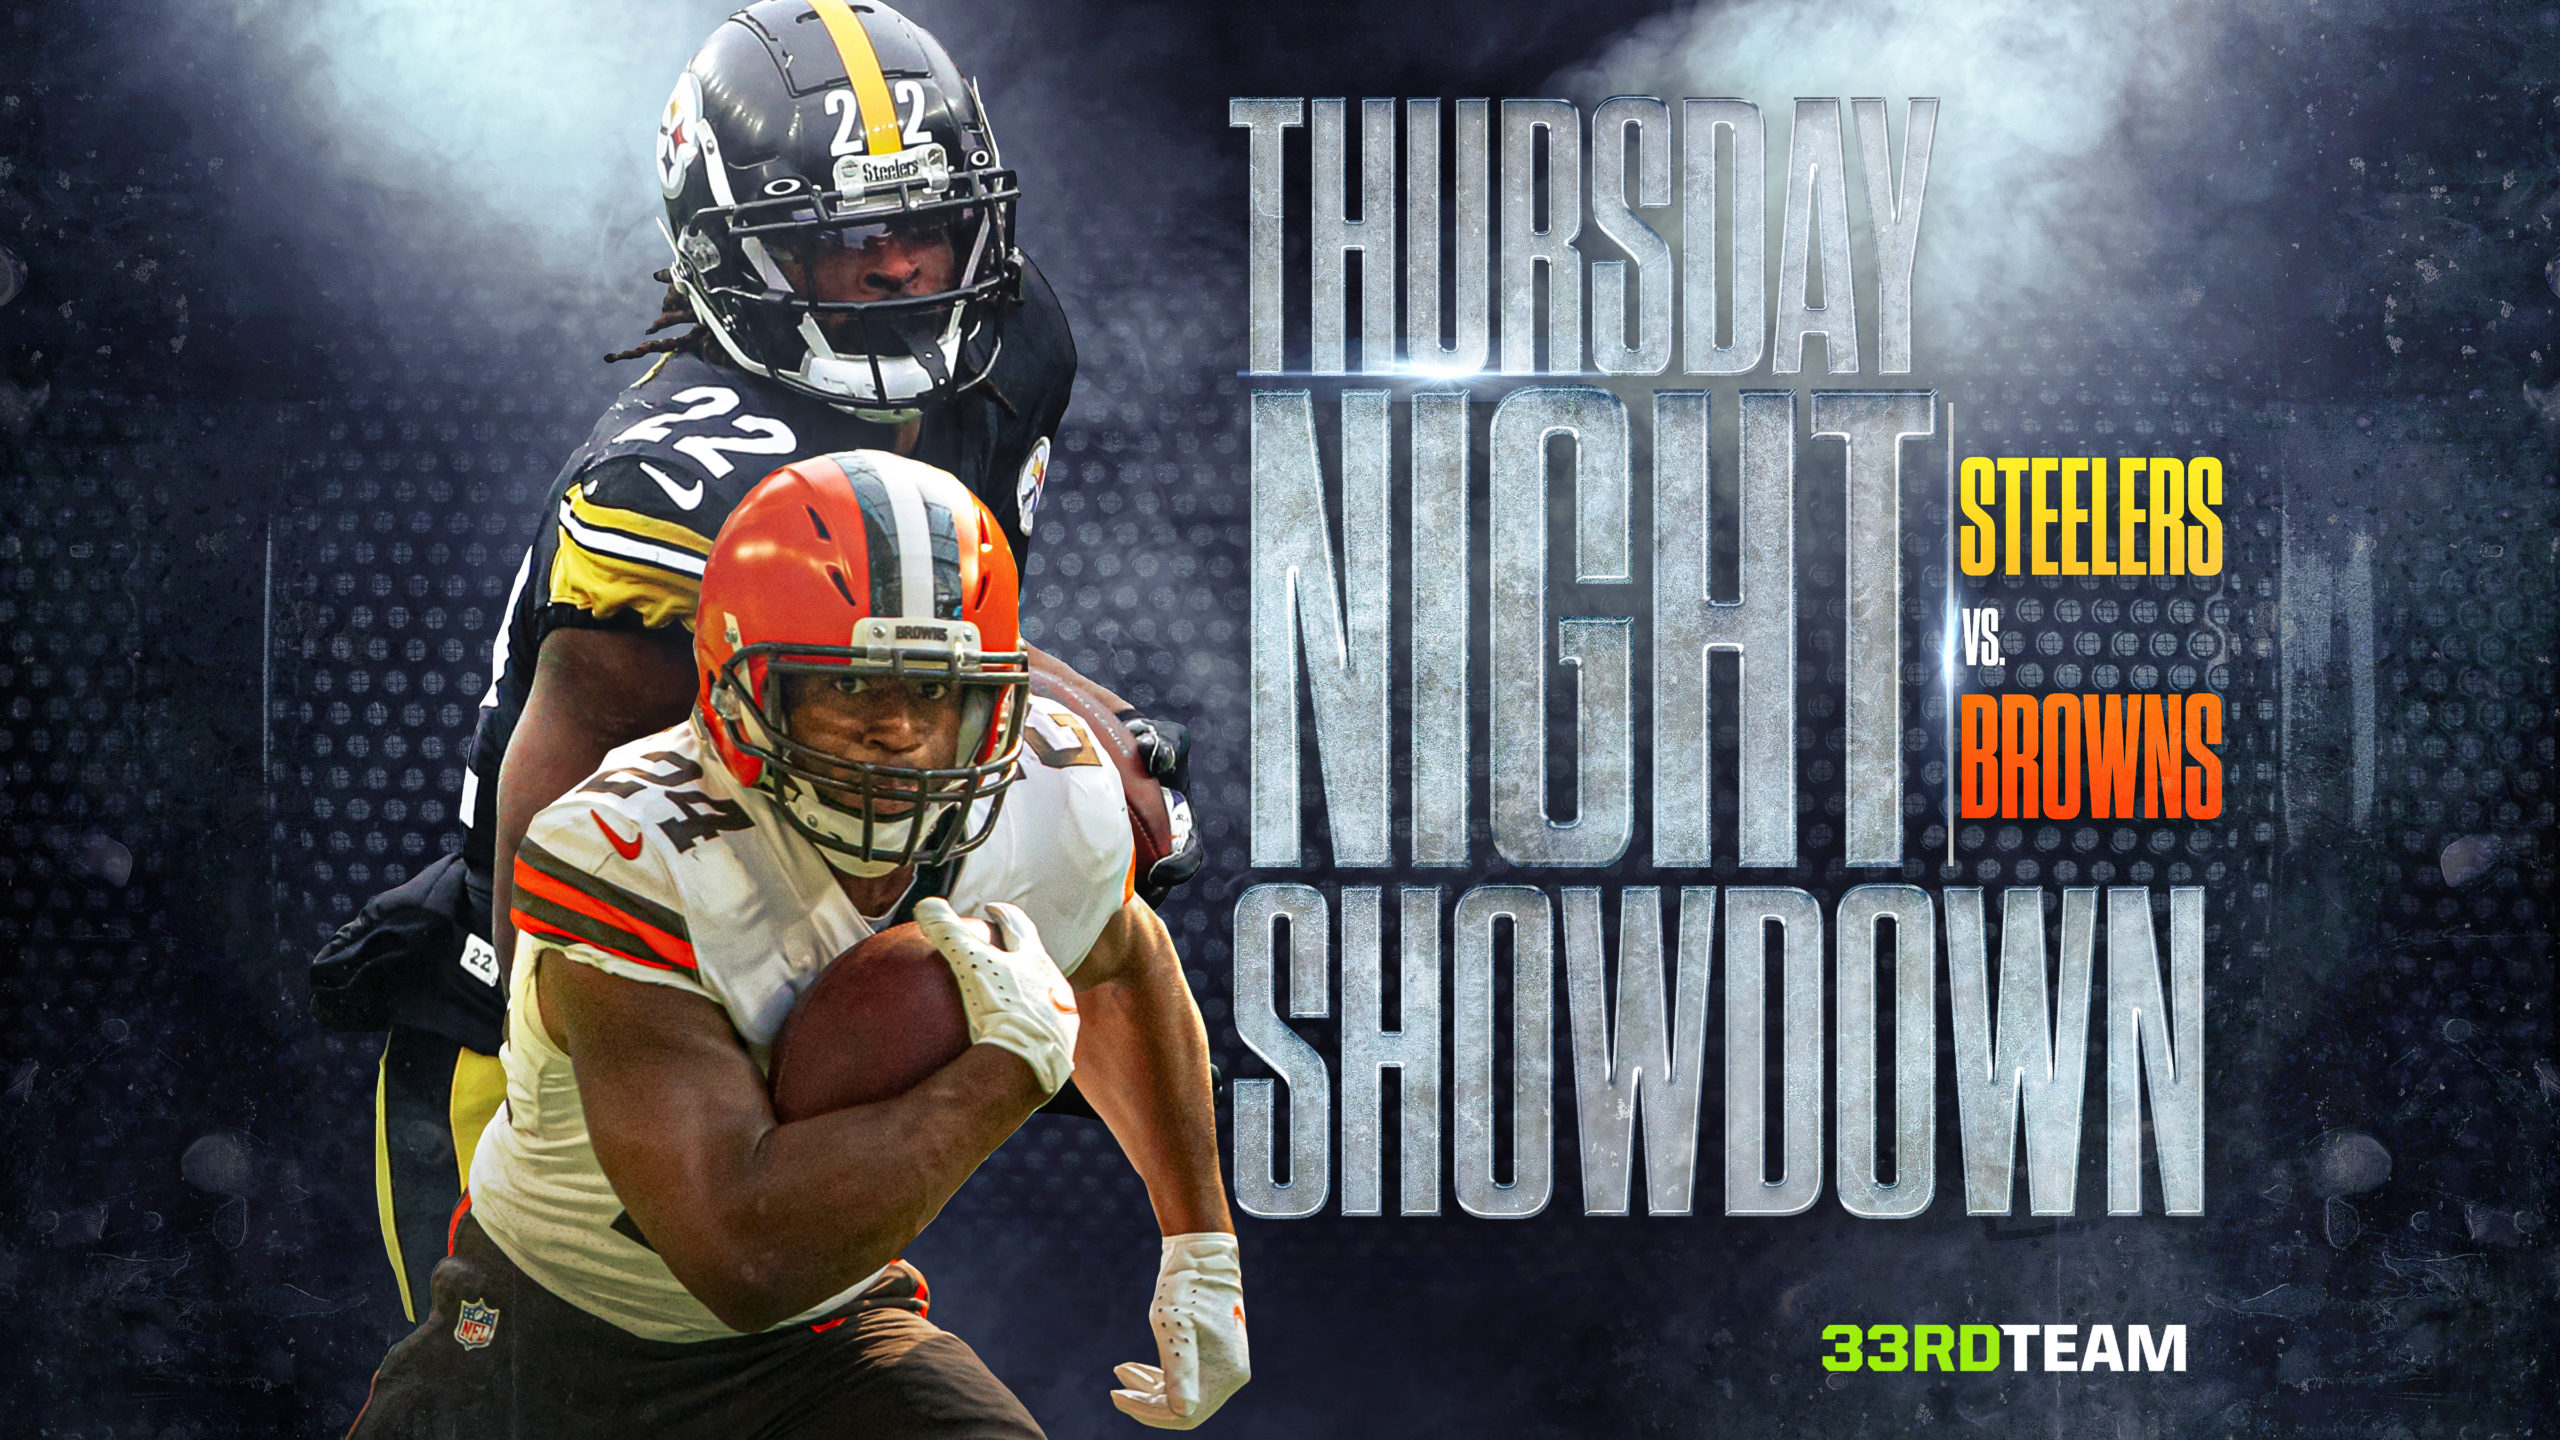 Steelers vs. Browns Thursday Night Football